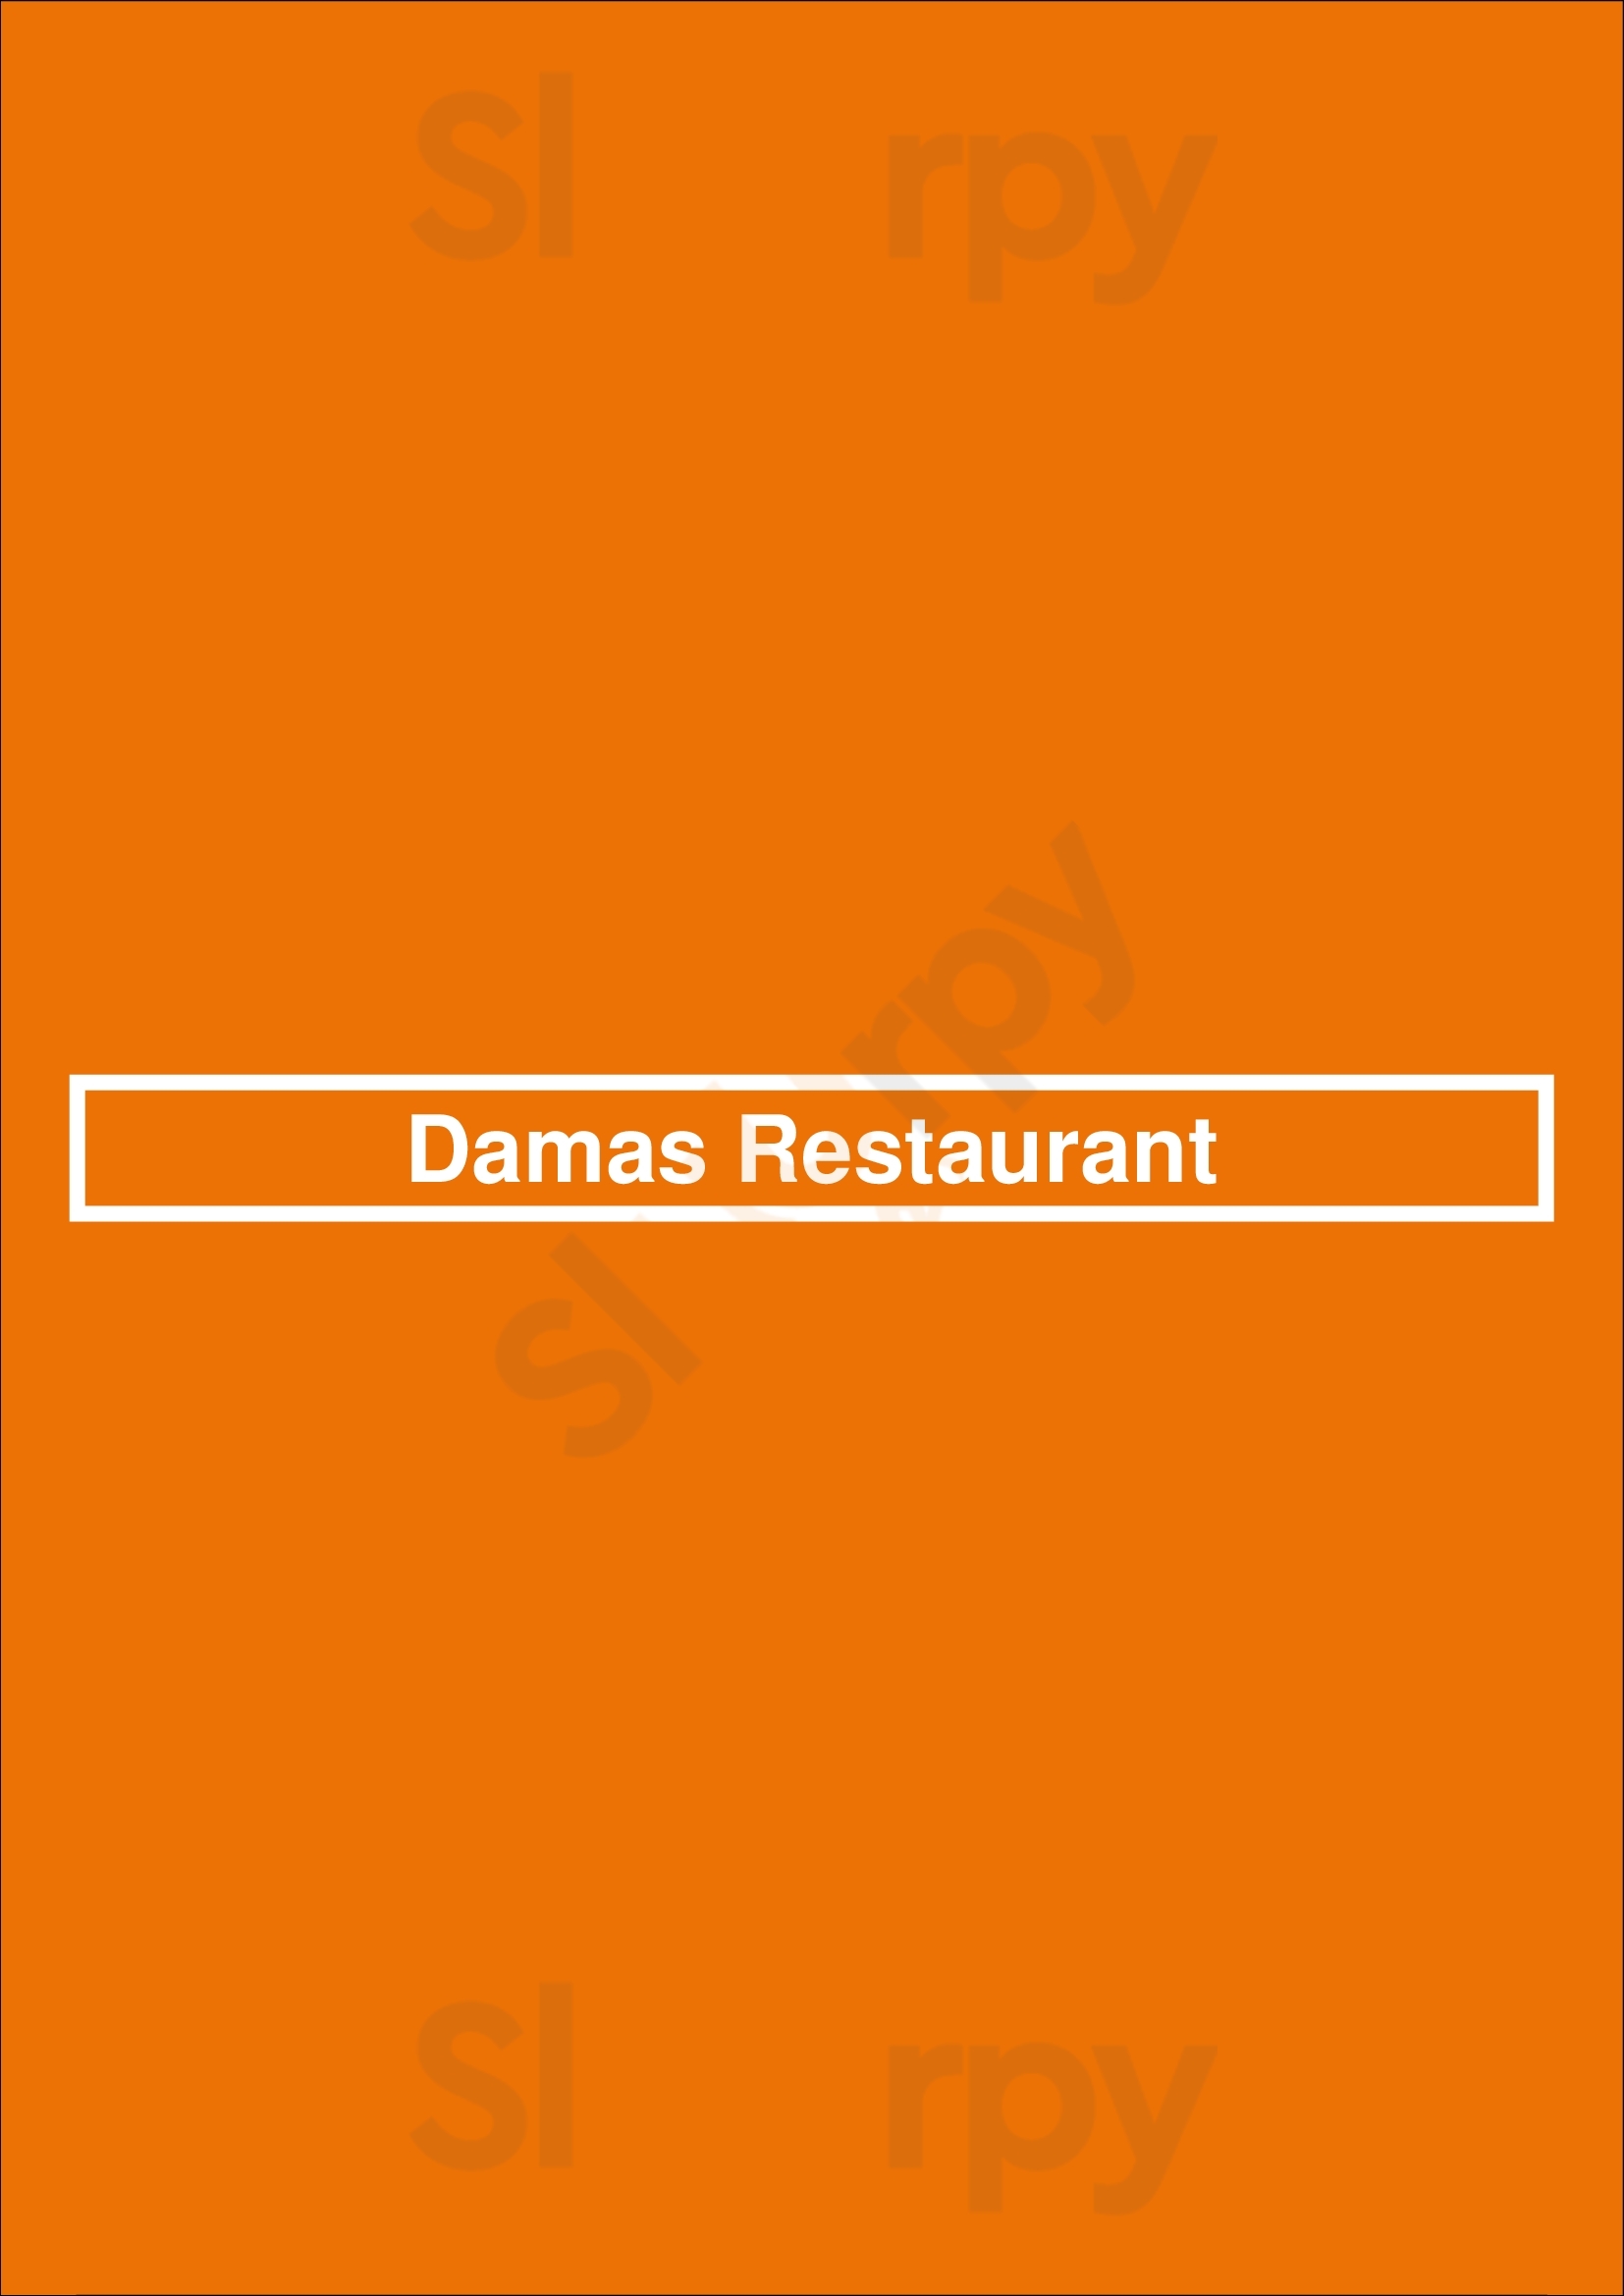 Damas Restaurant Montreal Menu - 1